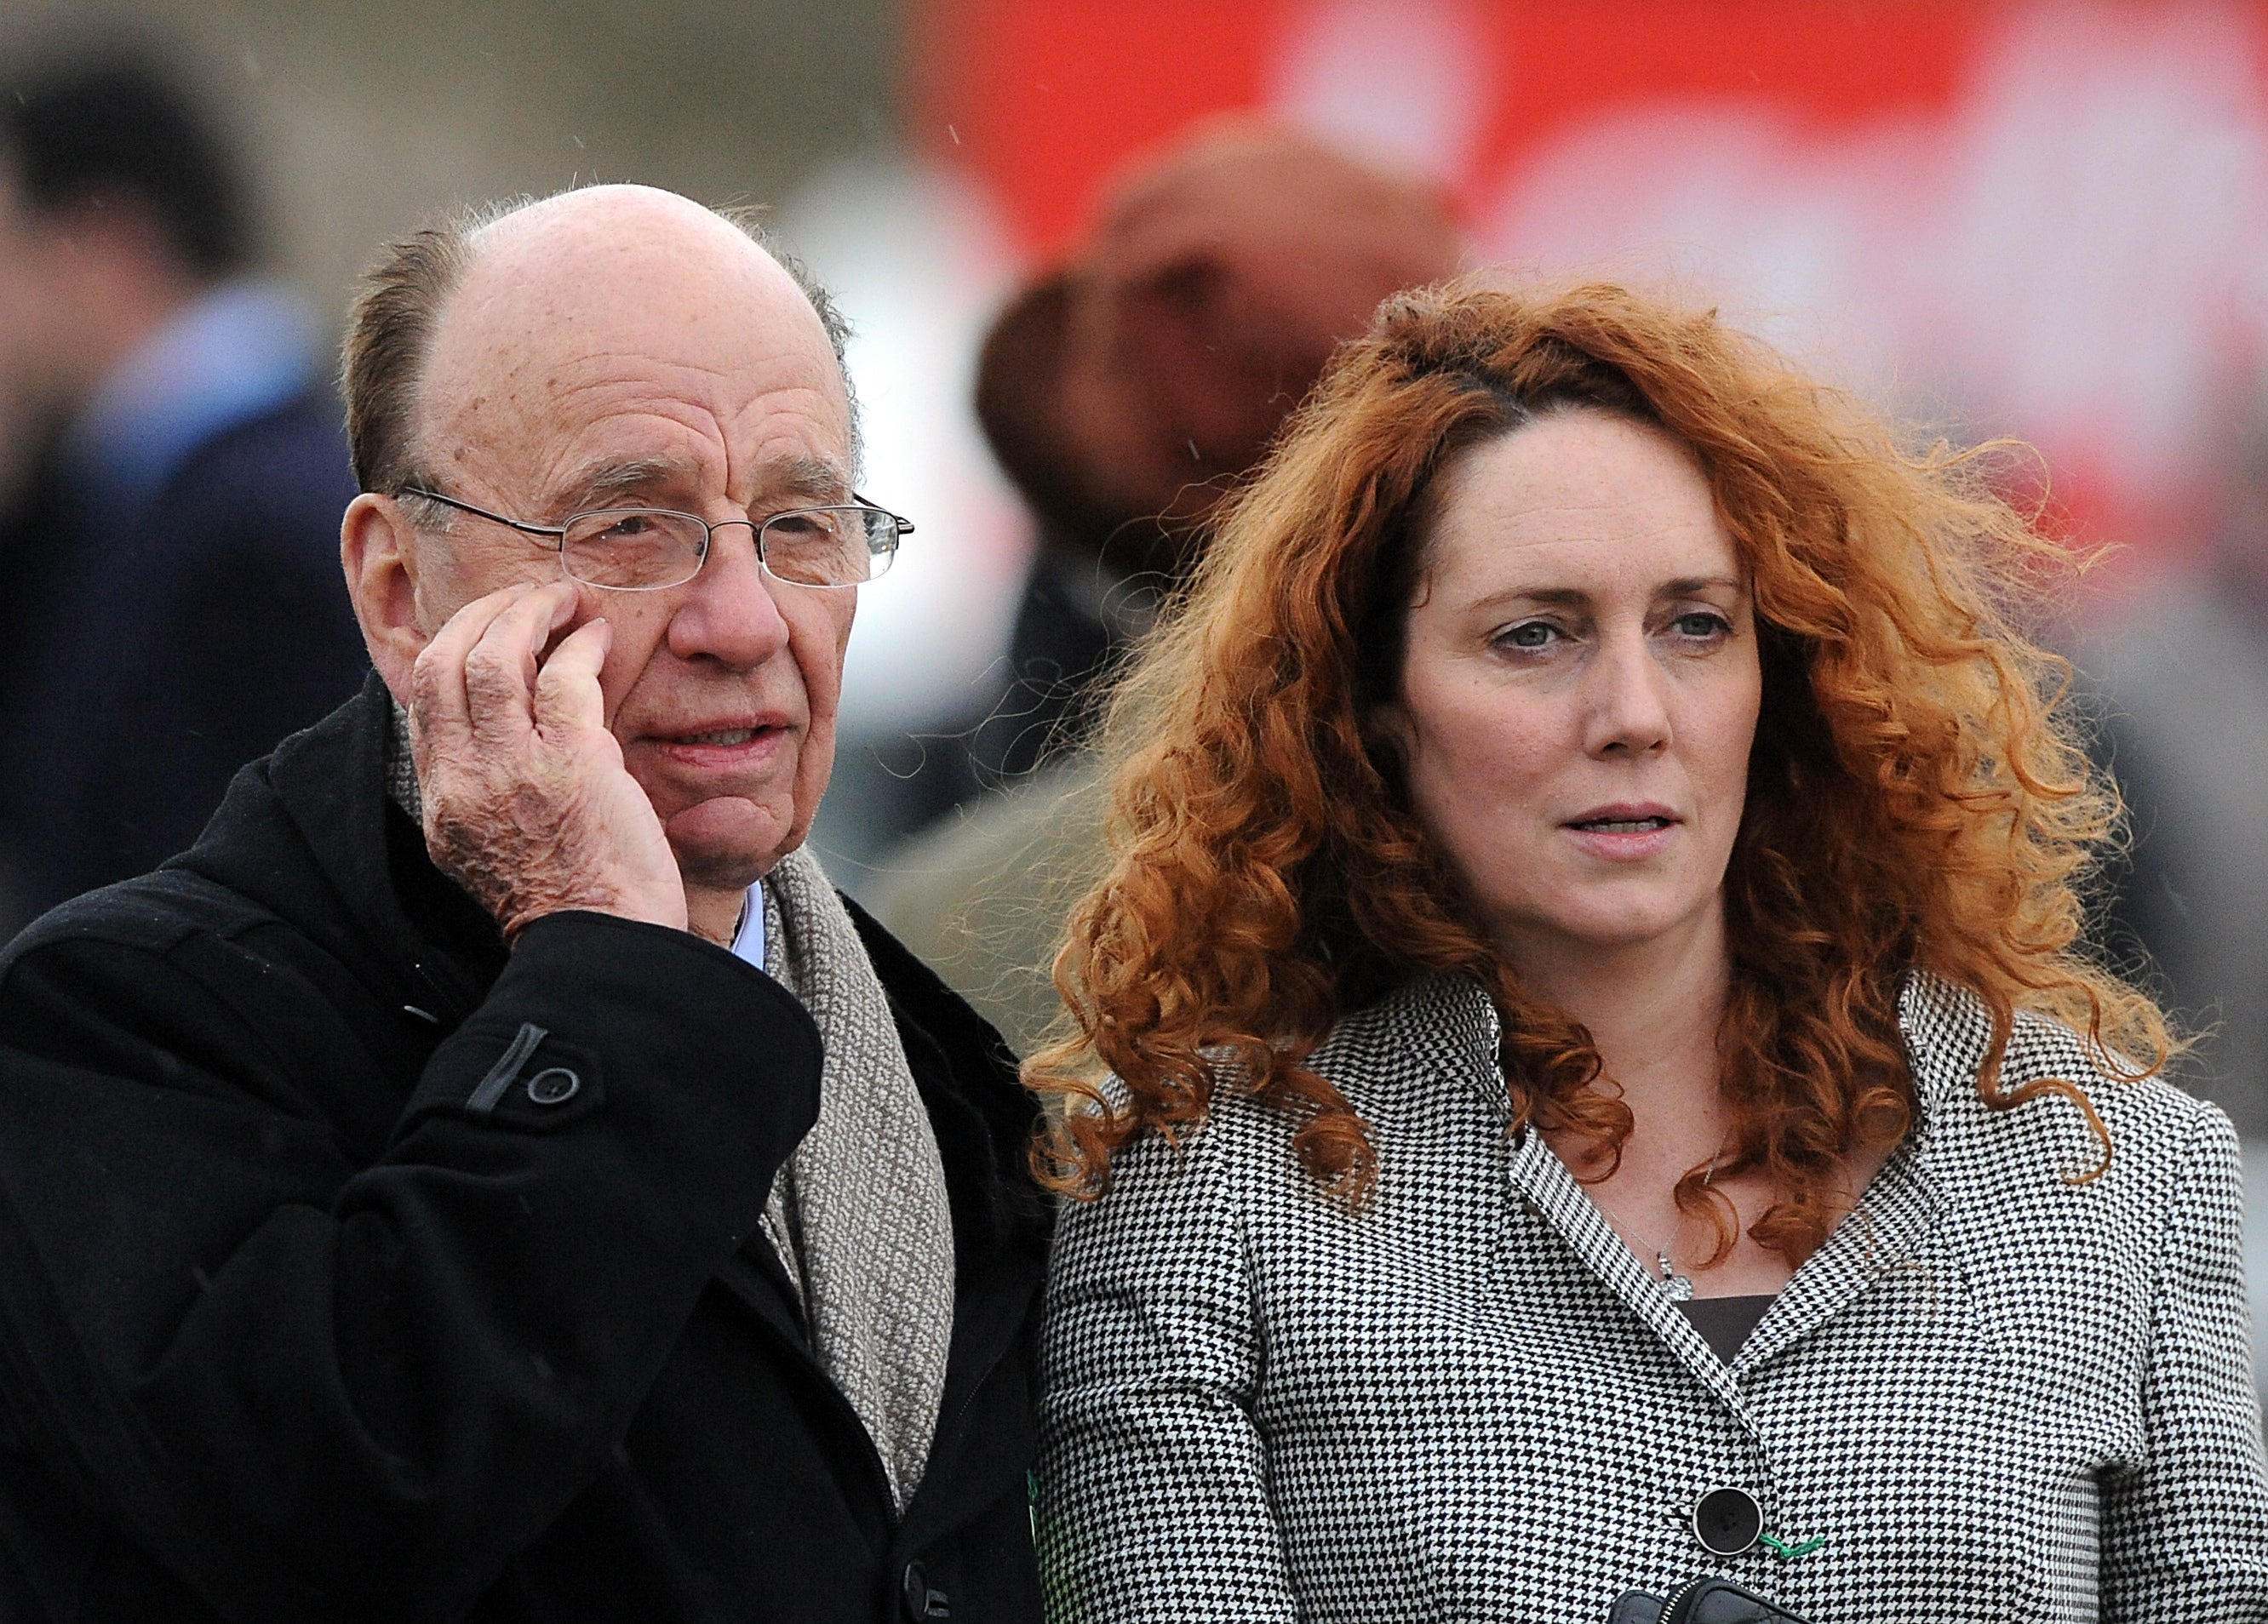 Rupert Murdoch and News UK’s chief executive, Rebekah Brooks, during the 2010 Cheltenham Festival